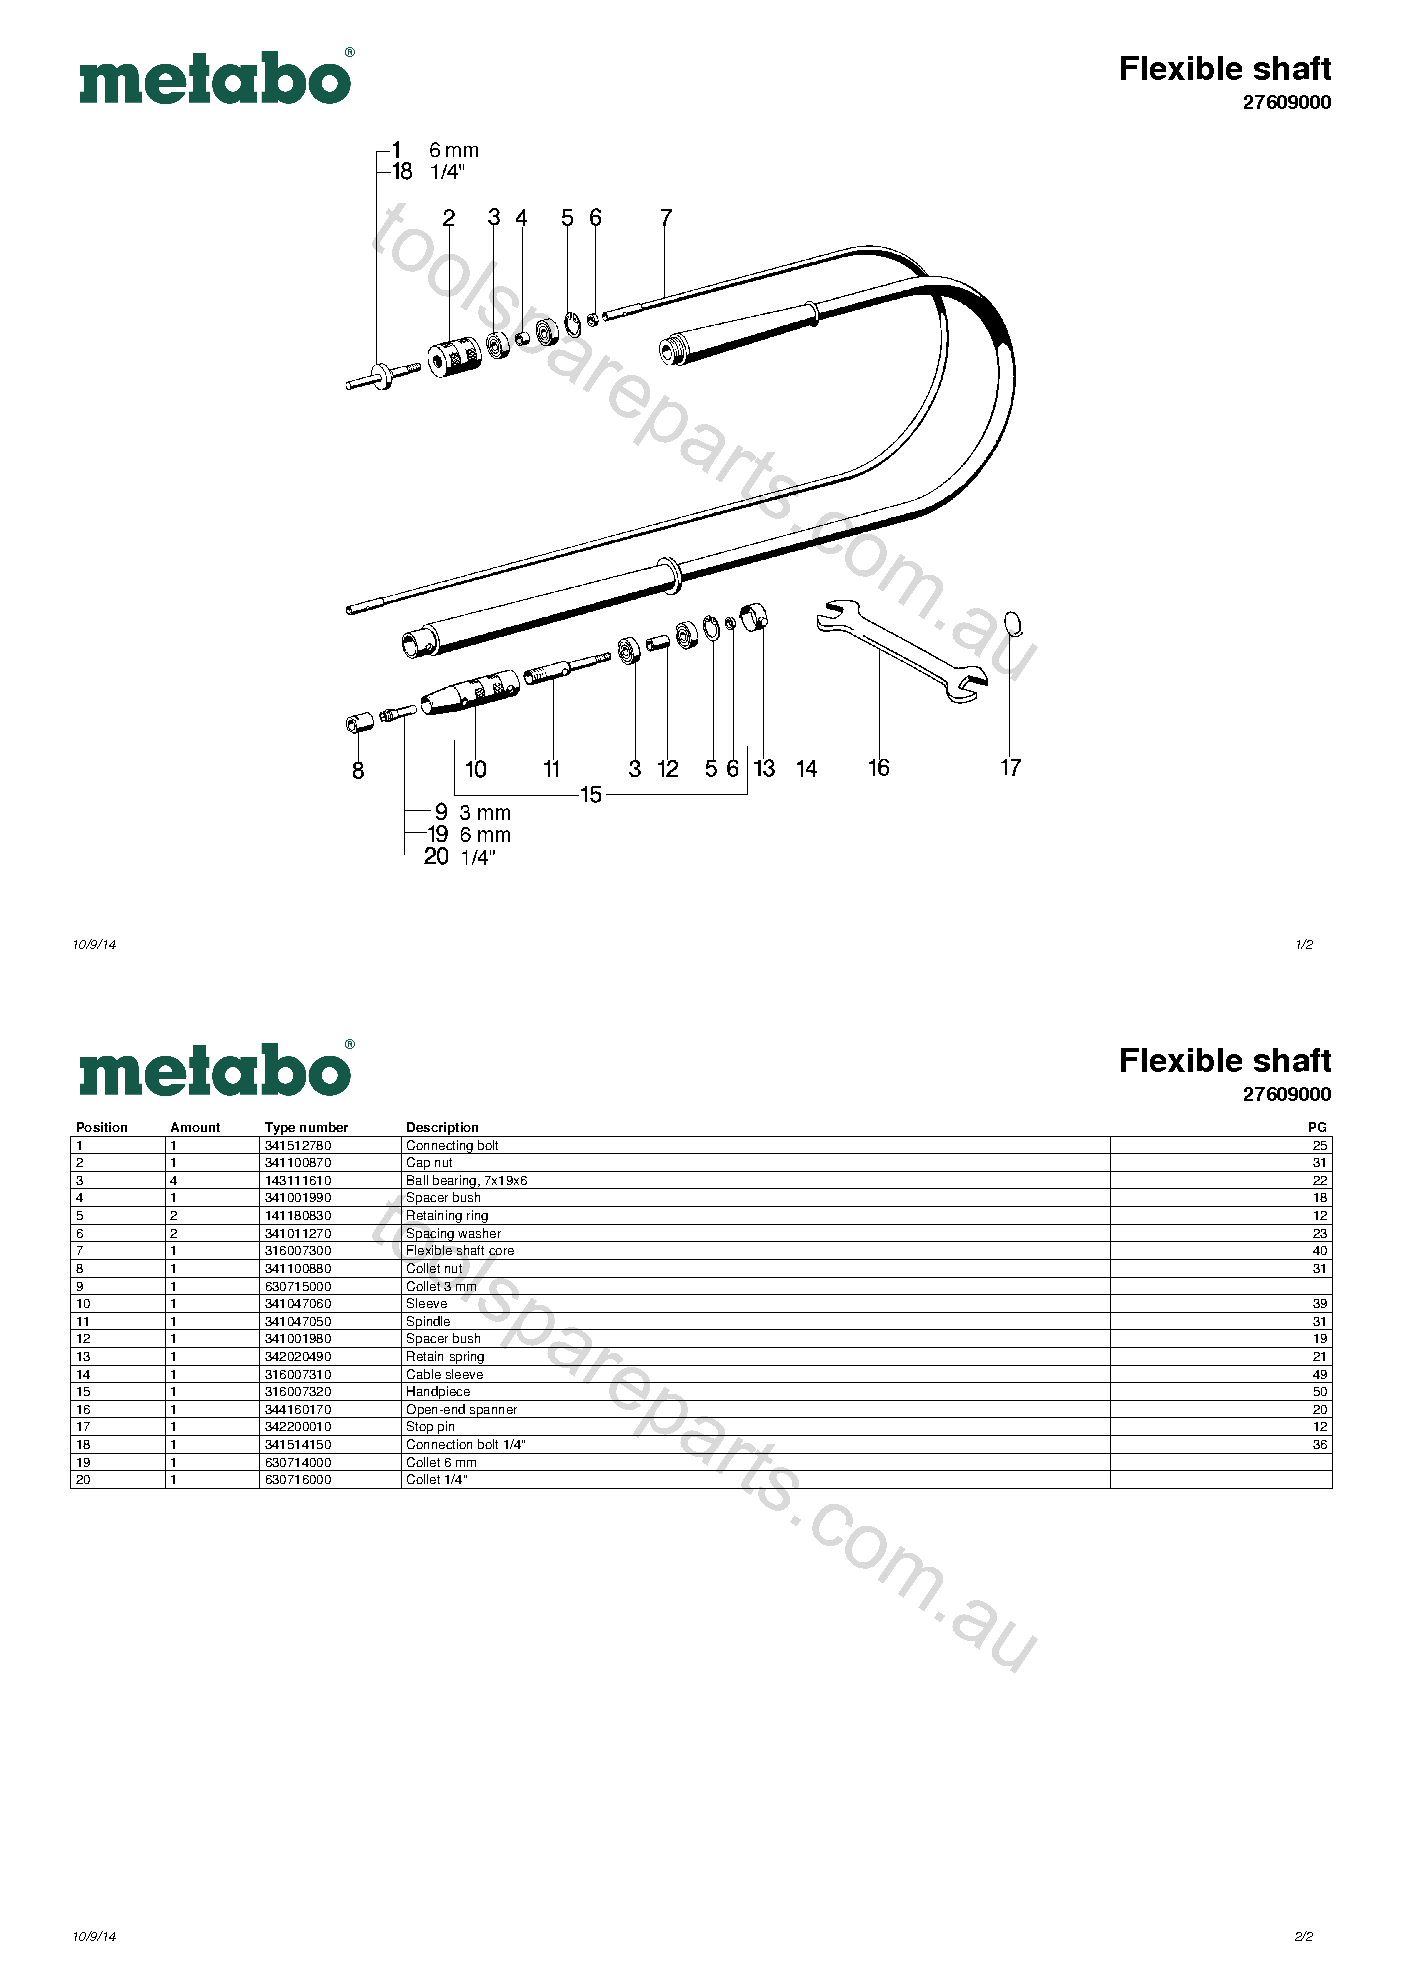 Metabo Flexible shaft 27609000  Diagram 1